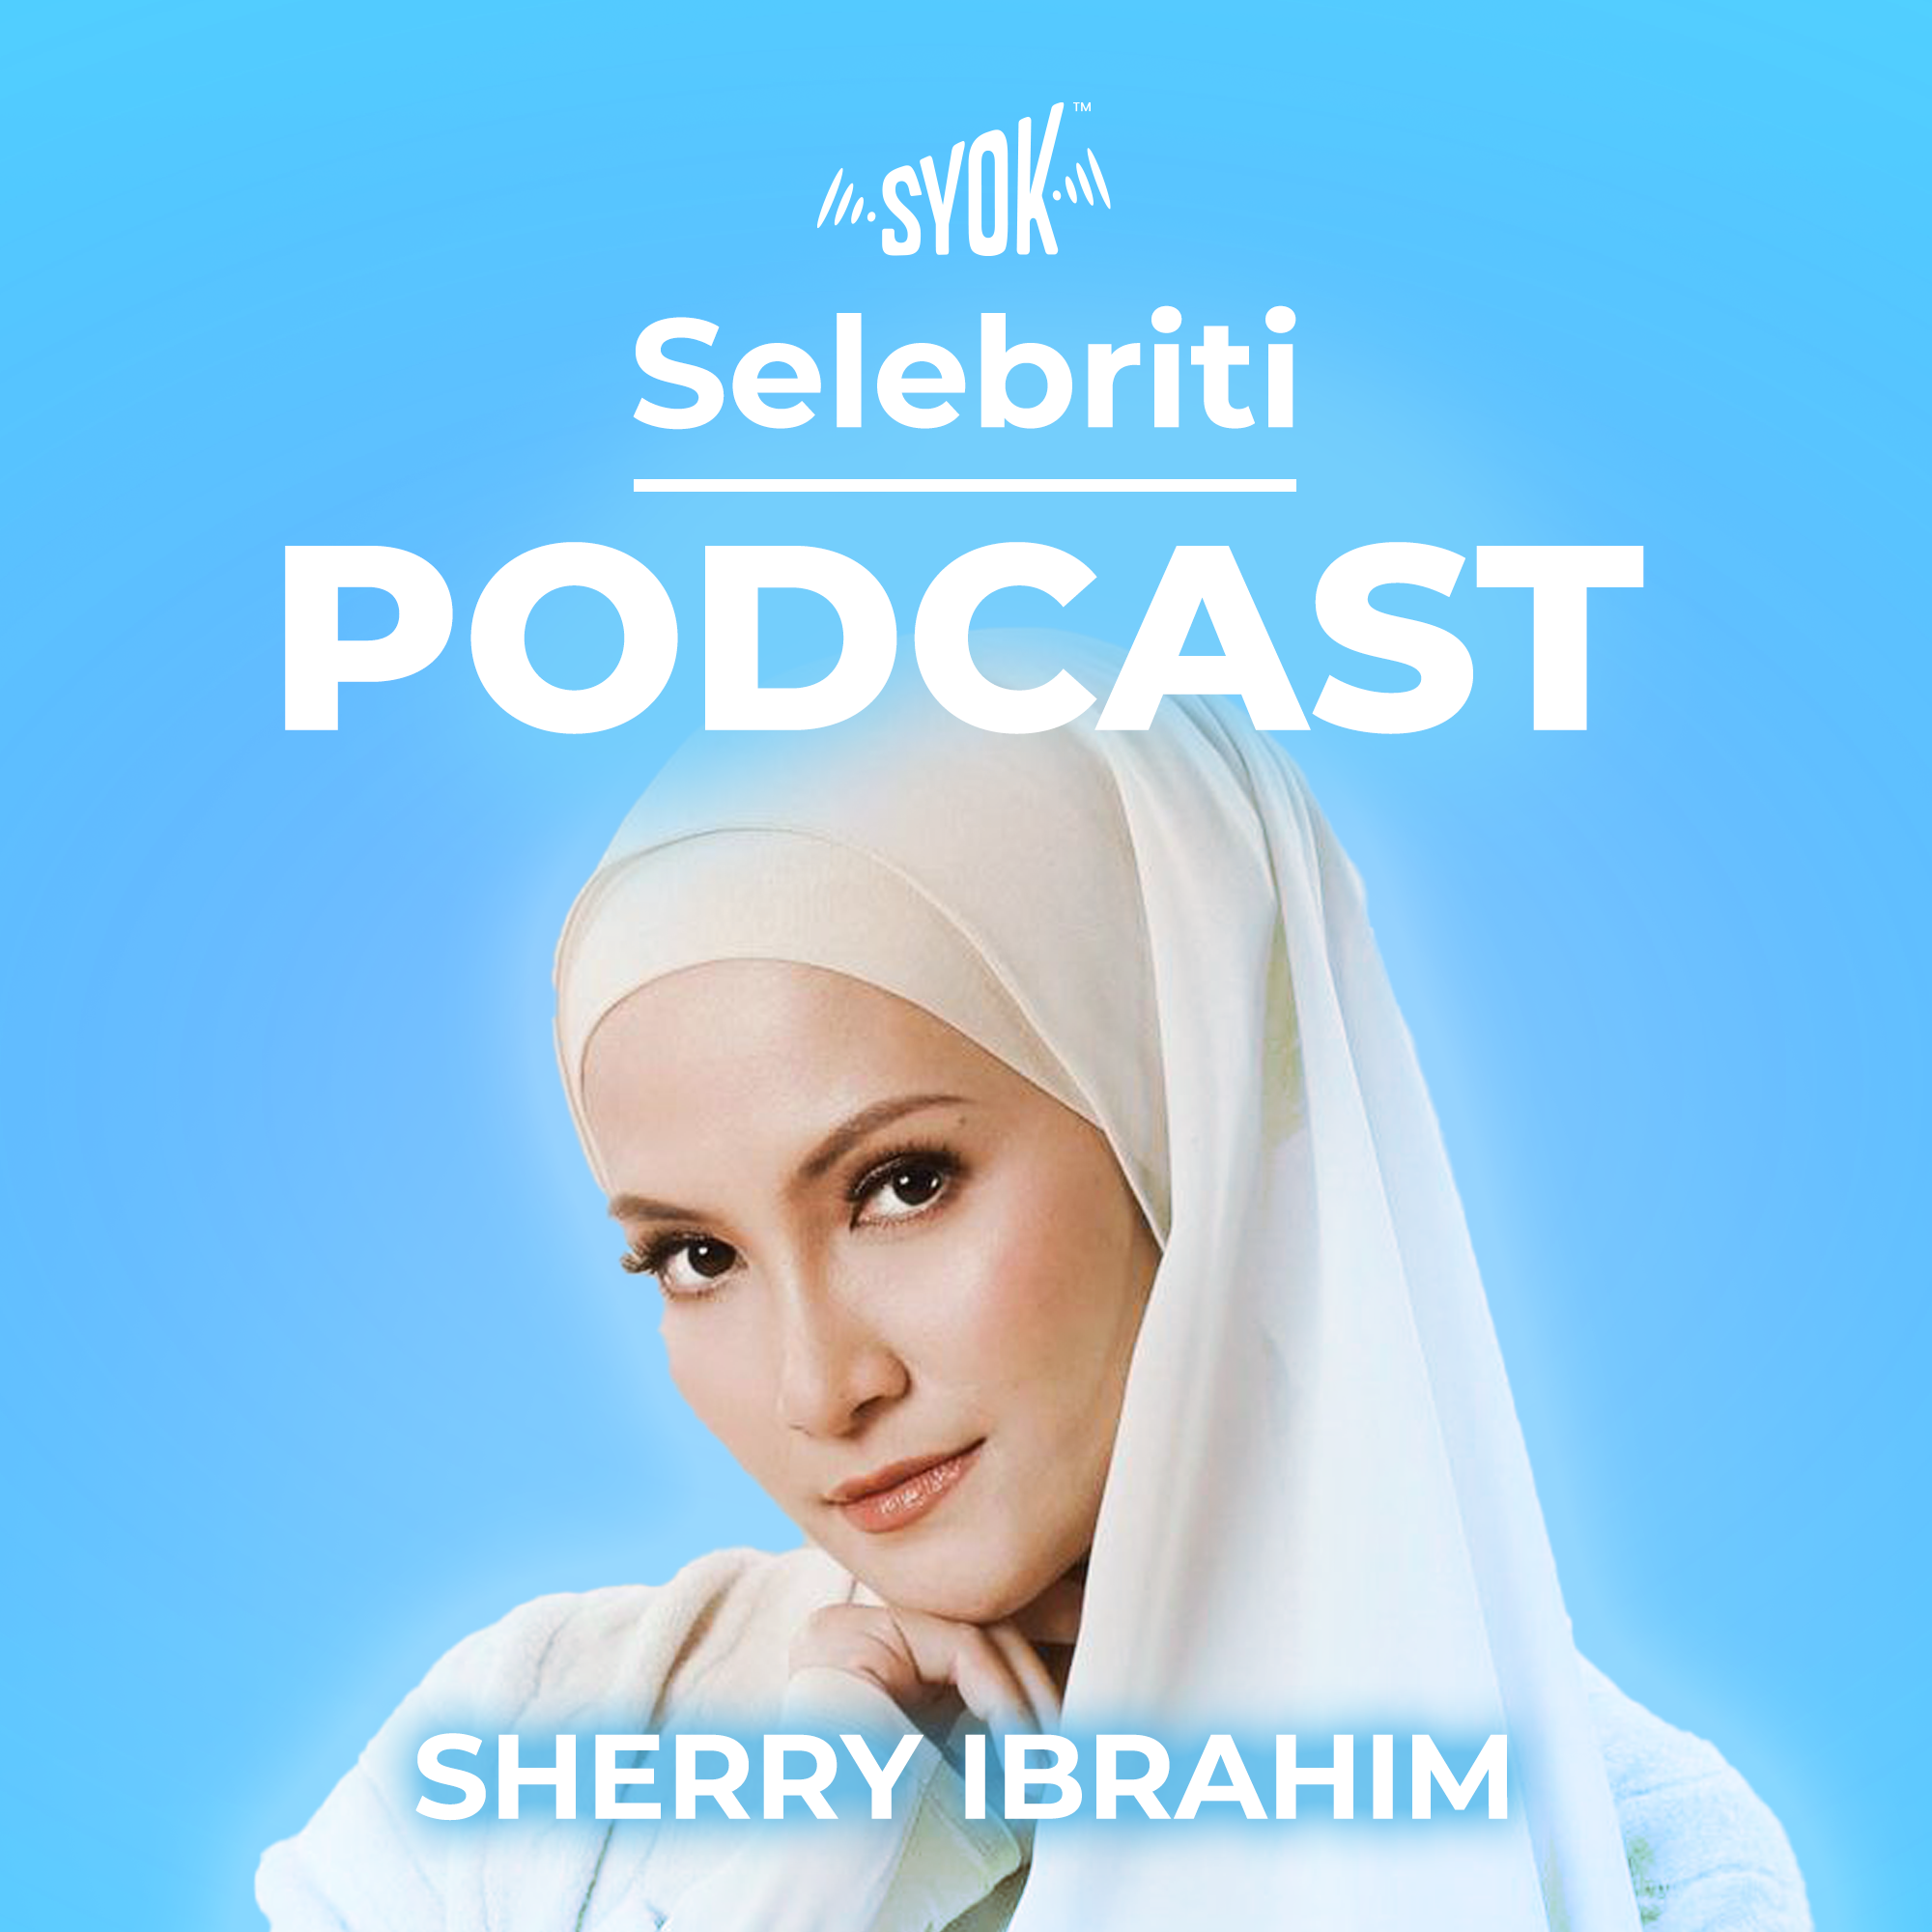 Selebriti Podcast: Sherry Ibrahim - SYOK Podcast [BM]